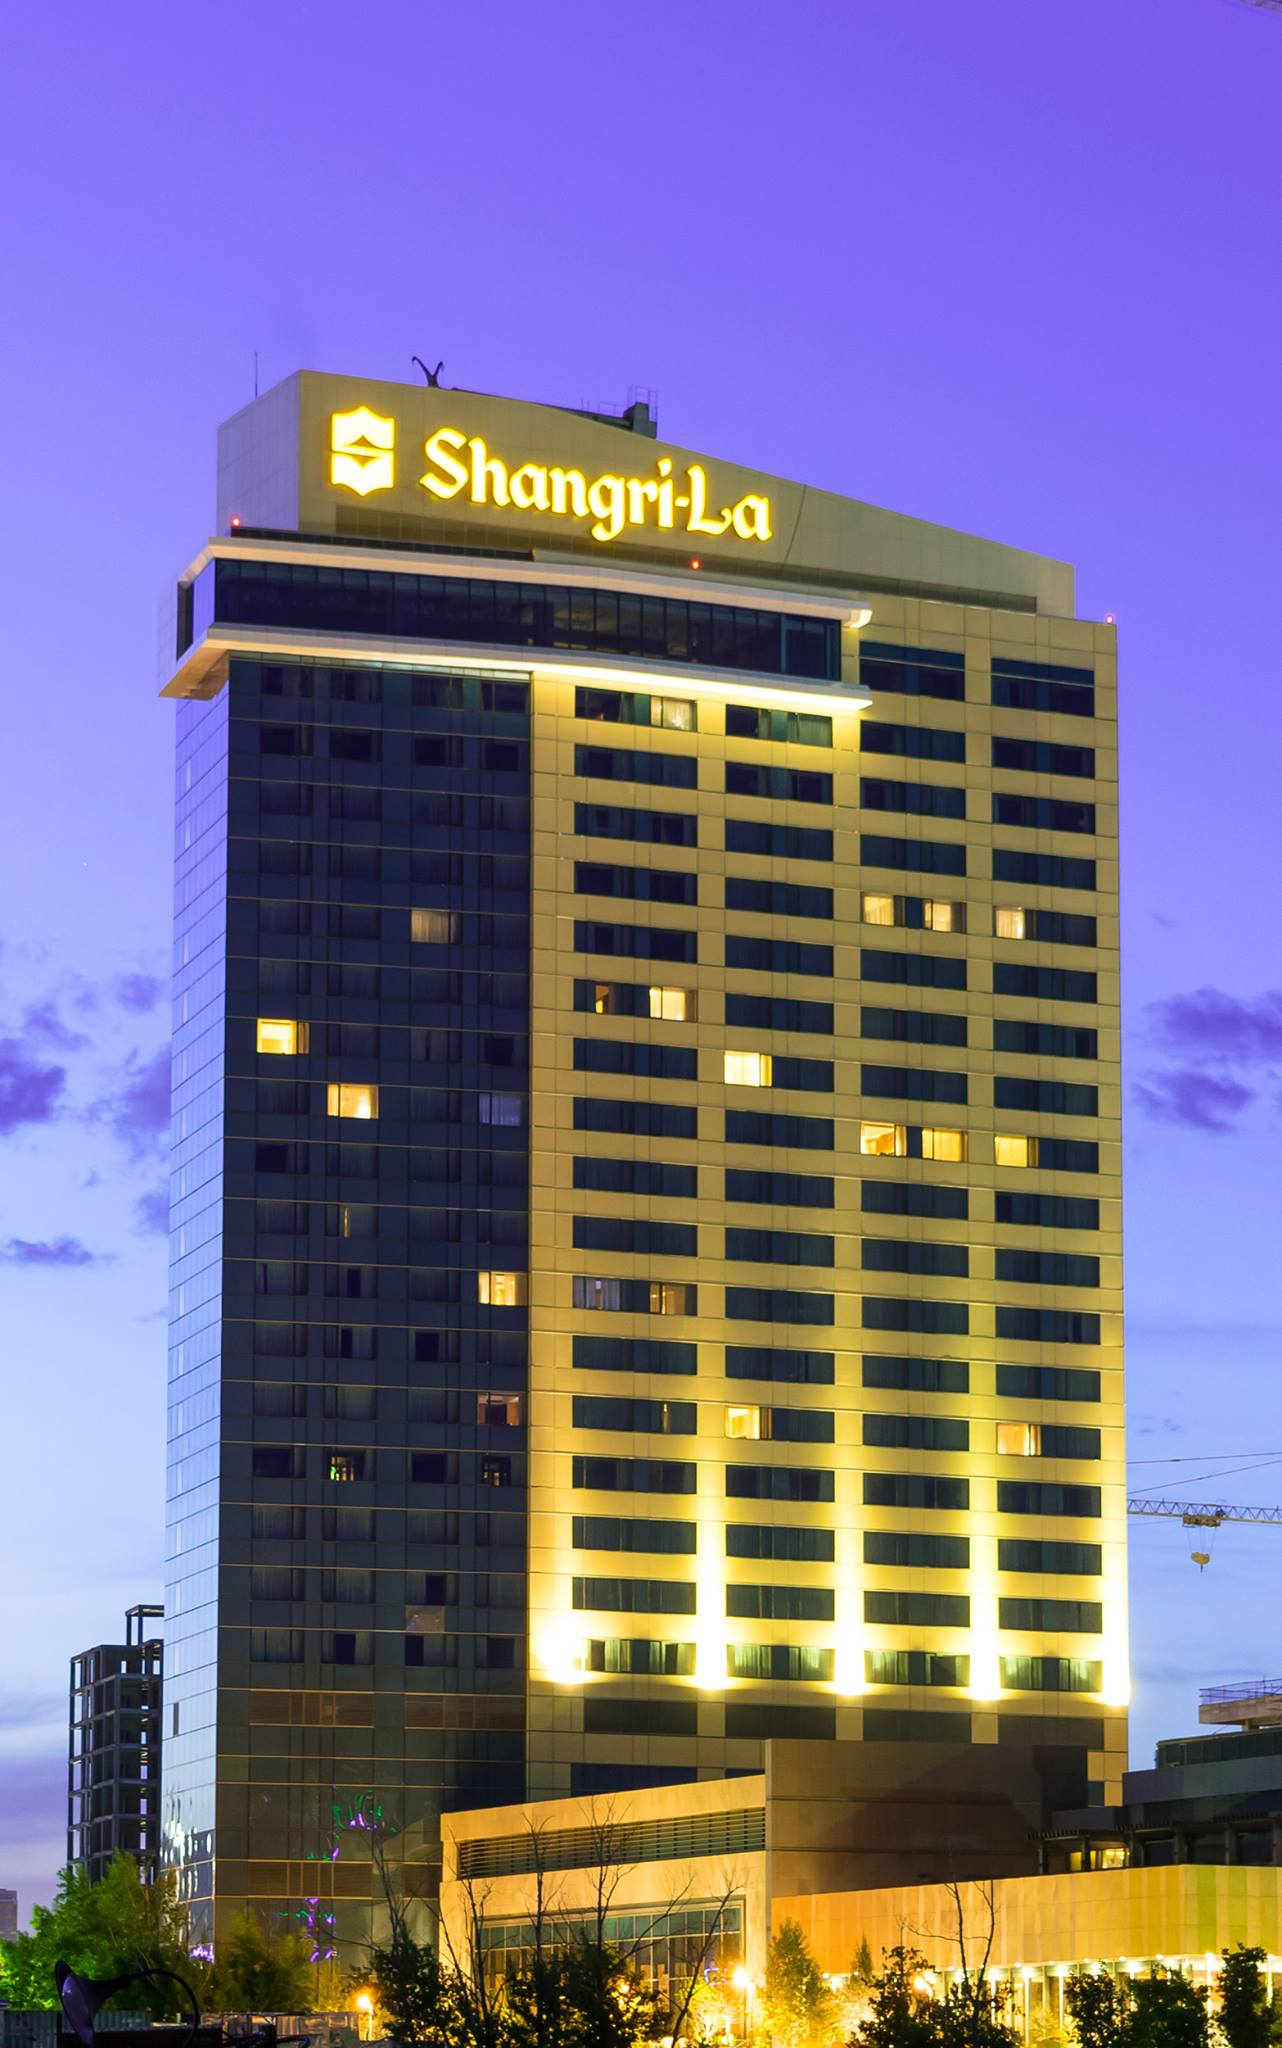 Shangri-la hotel